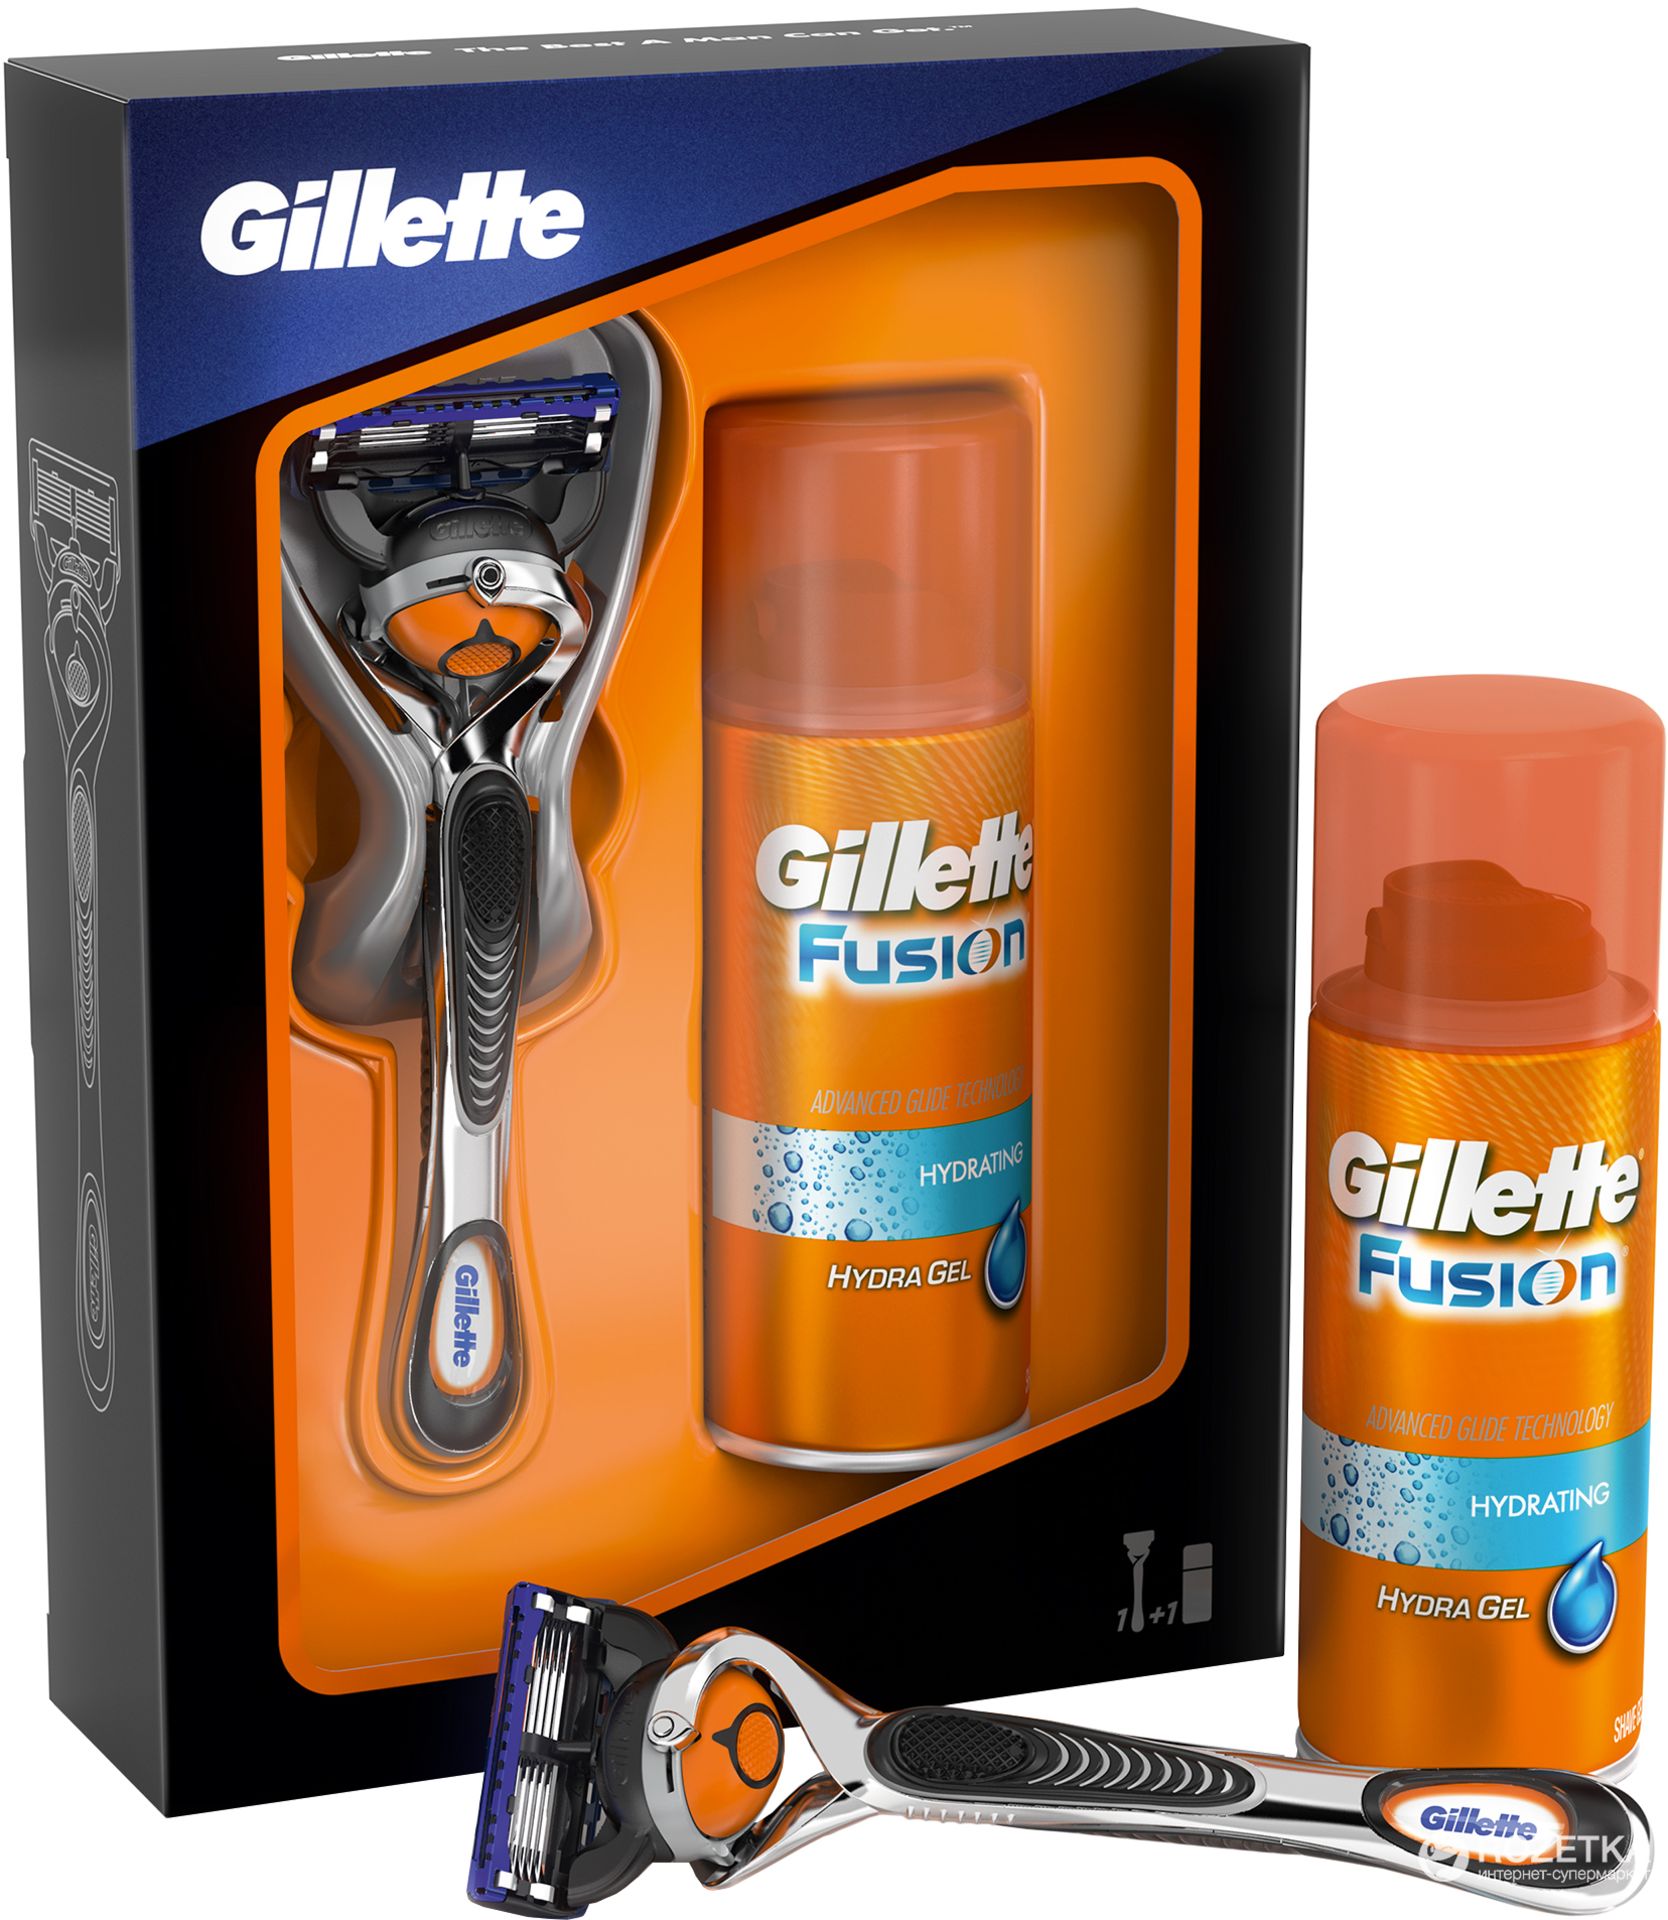 V Brand New Gillette Fusion Gift Set Inc Hydra Gel - Gillette Fusion Razer - Blade